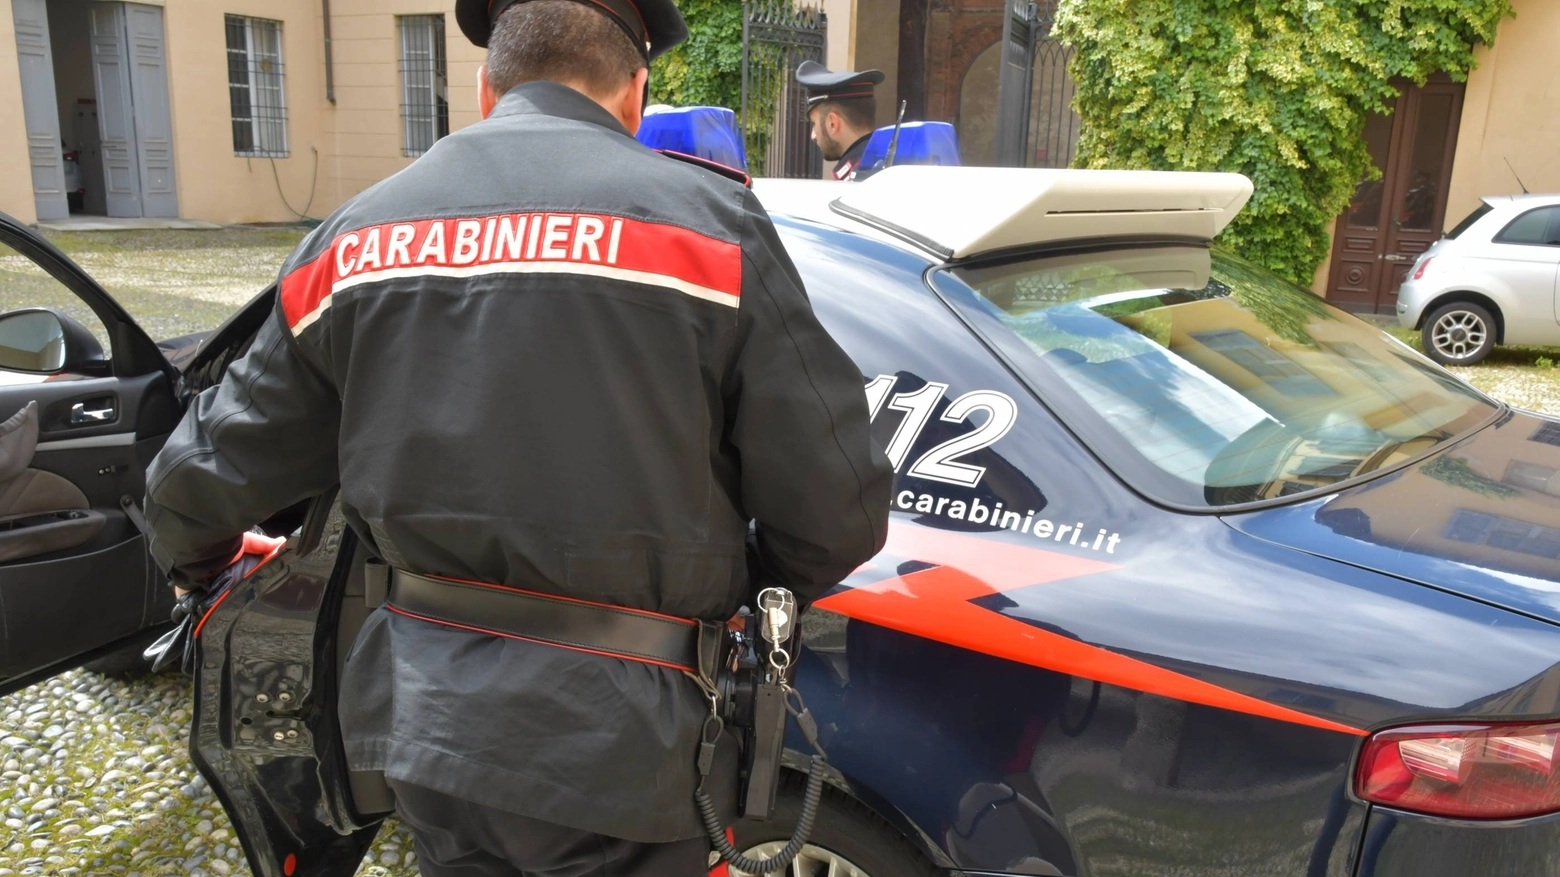 Carabinieri di Pavia